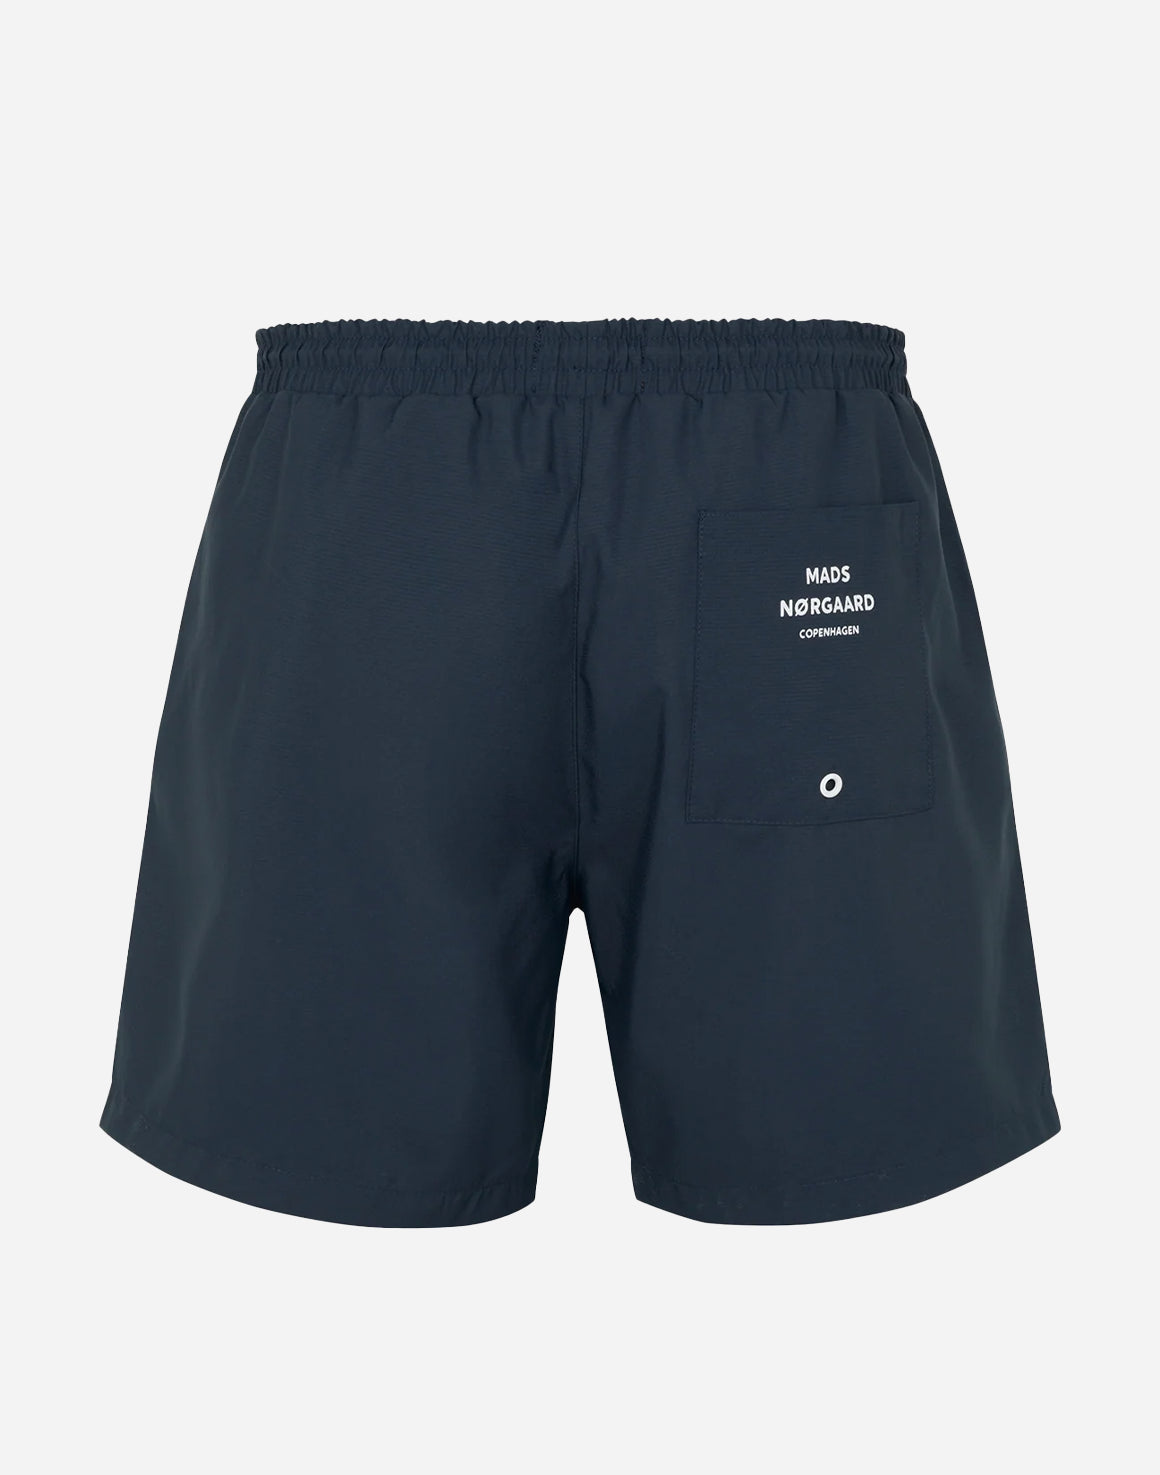 Sea sandro shorts - Navy - Mads Nørgaard - Kul og Koks